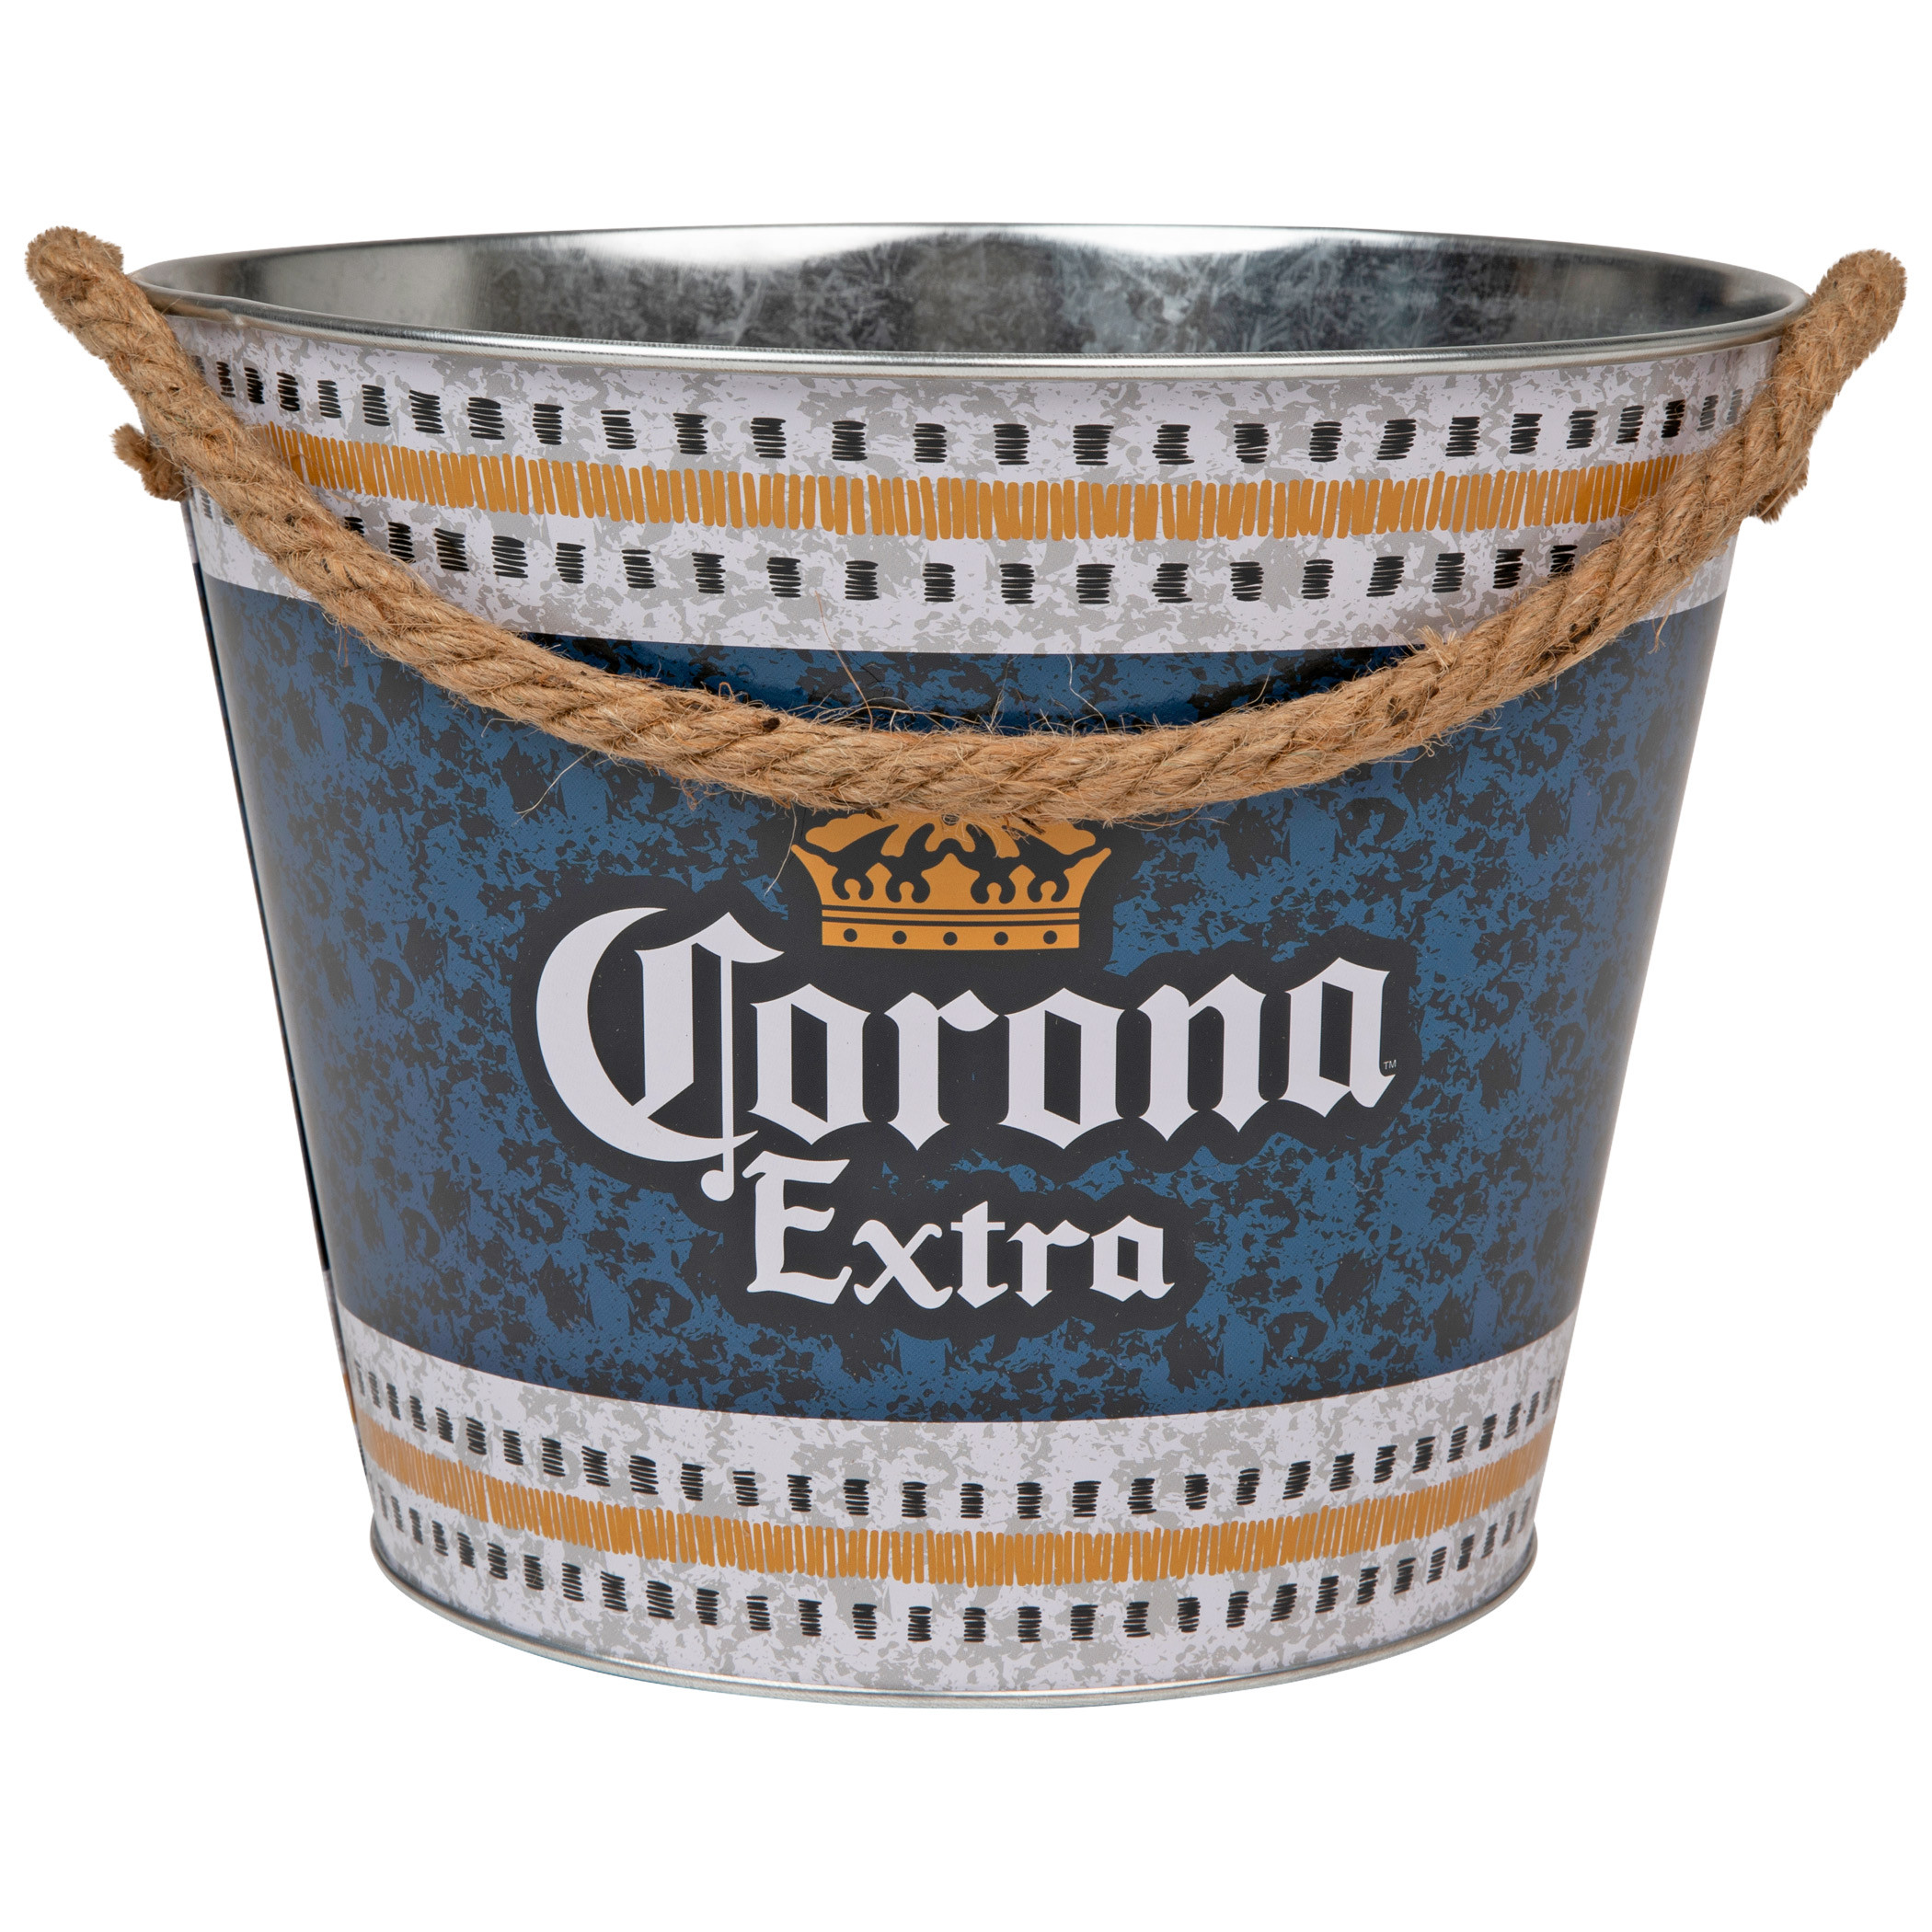 Corona Extra Stainless Steel Bucket with Rope Handle